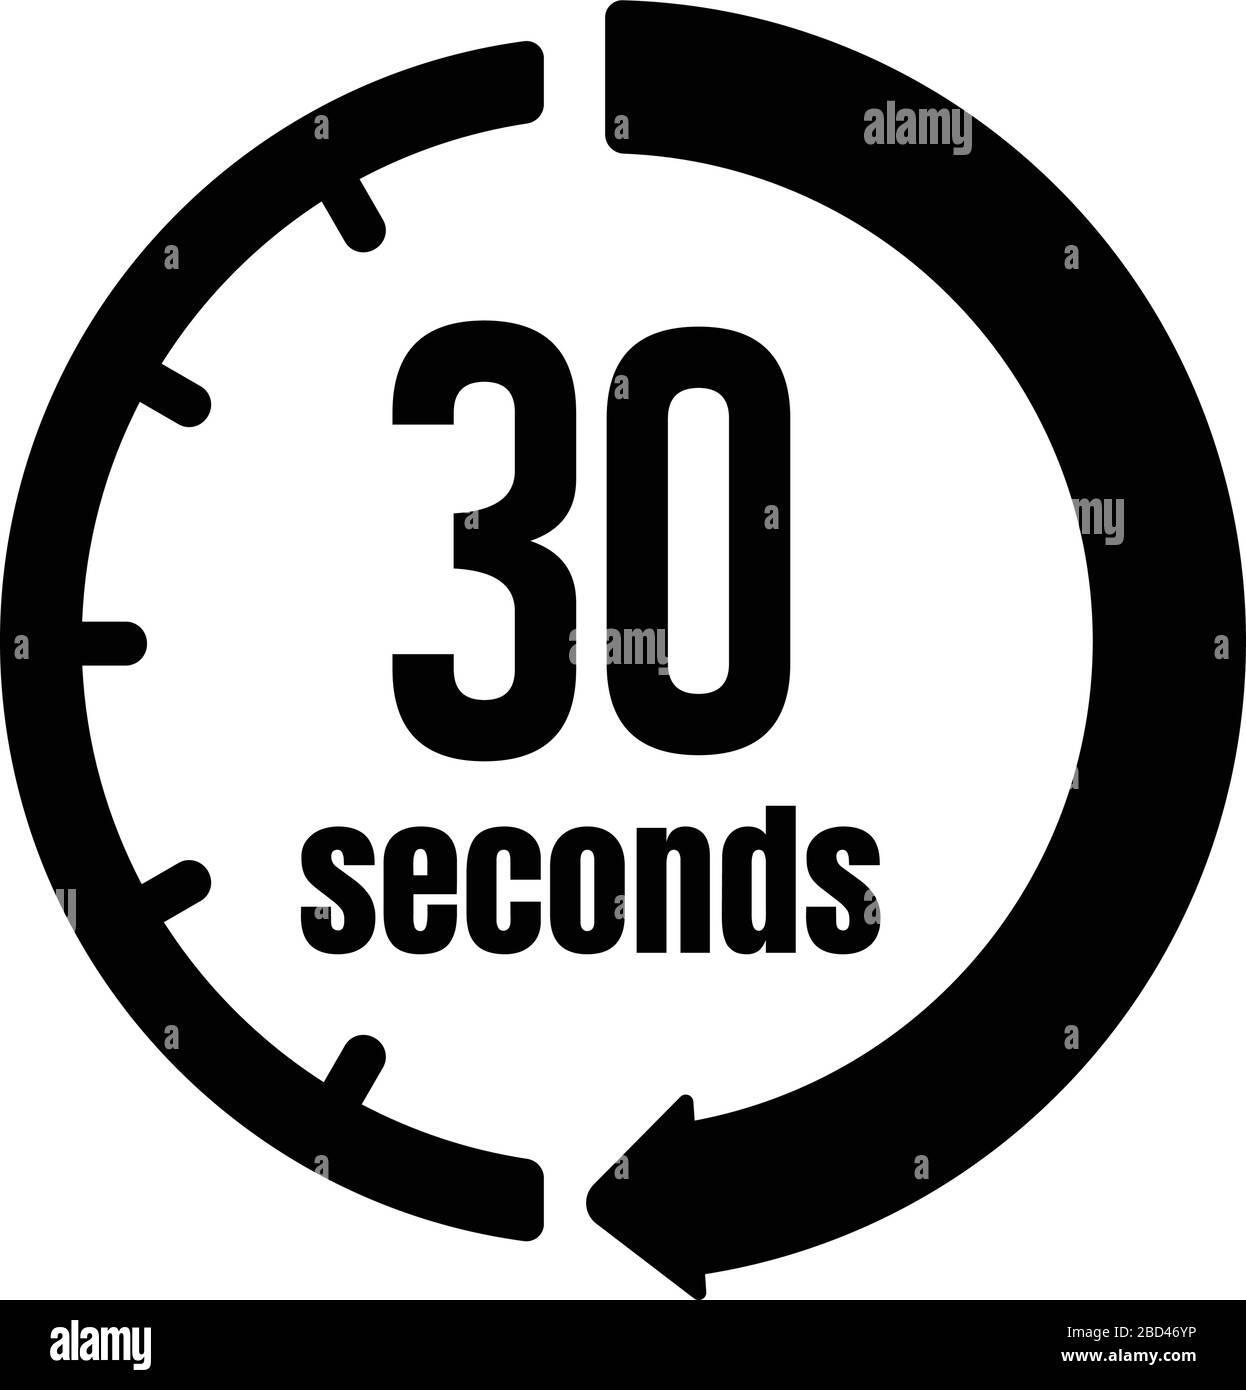 Правило 30 часов. Значок таймера. Таймер часы 30 секунд. Таймер пиктограмма 30 секунд. Значок 30 минут.